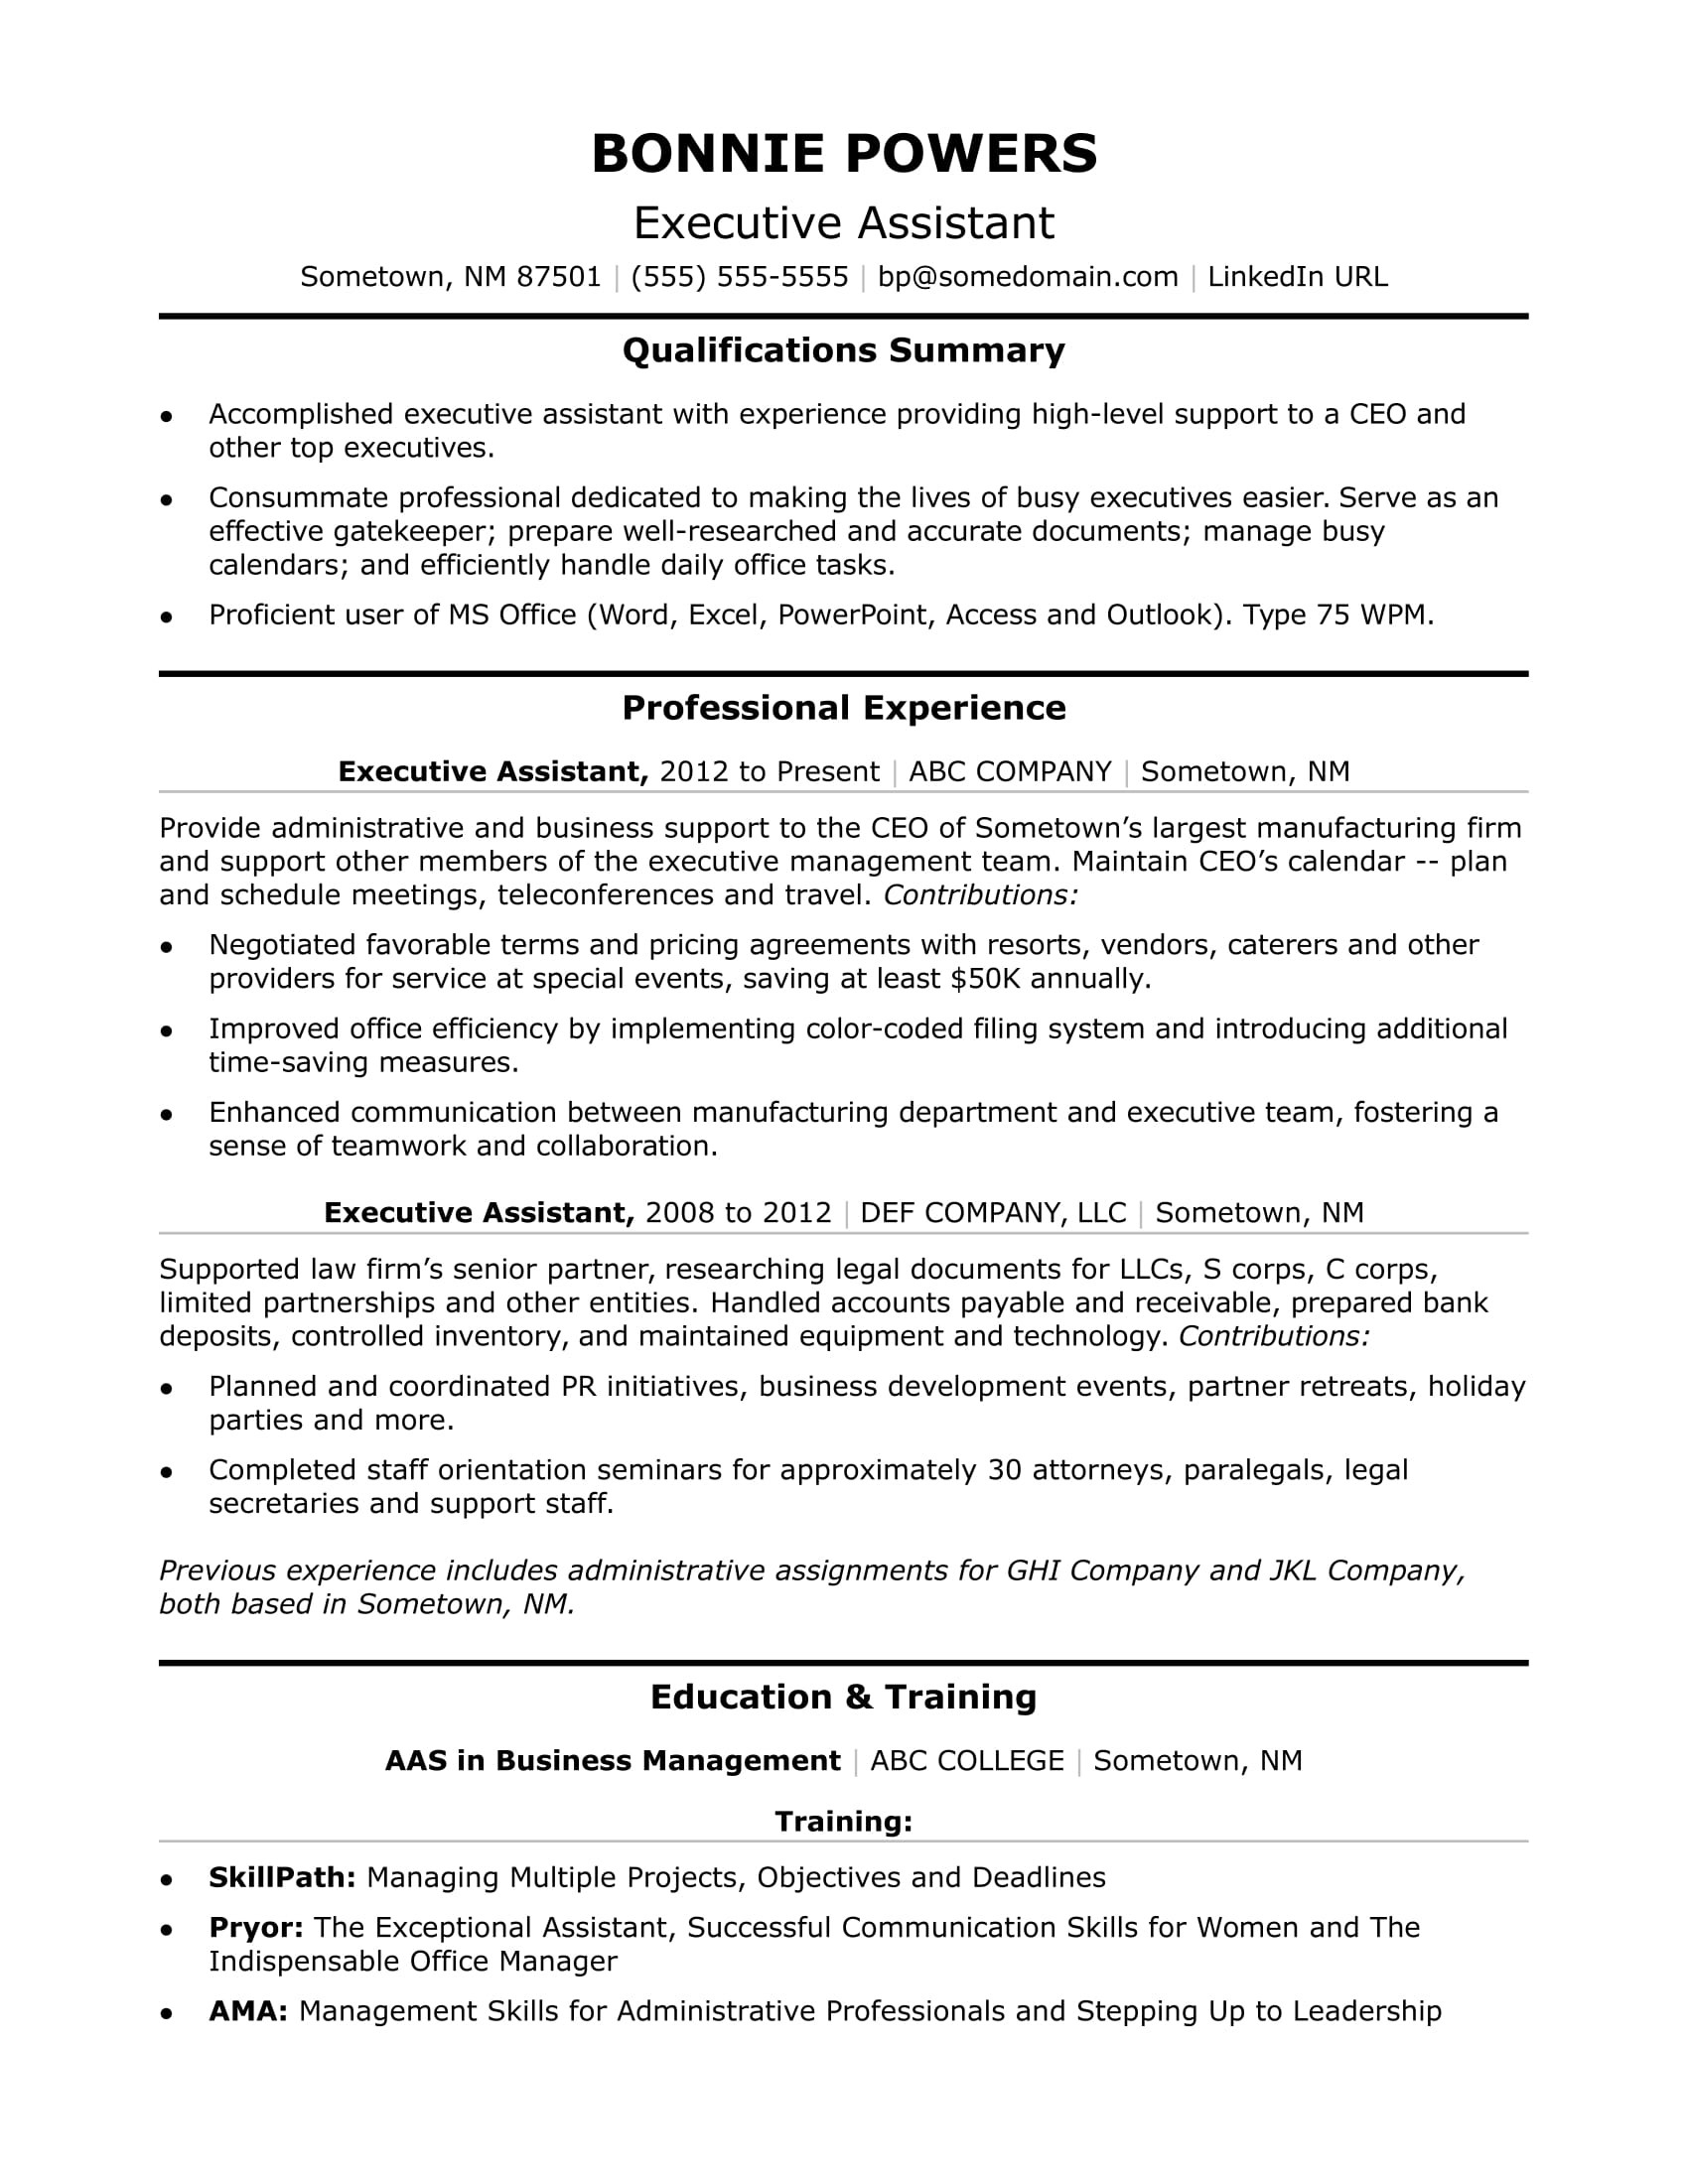 Sample Resume Headline for Administrative assistant Executive assistant Resume Monster.com